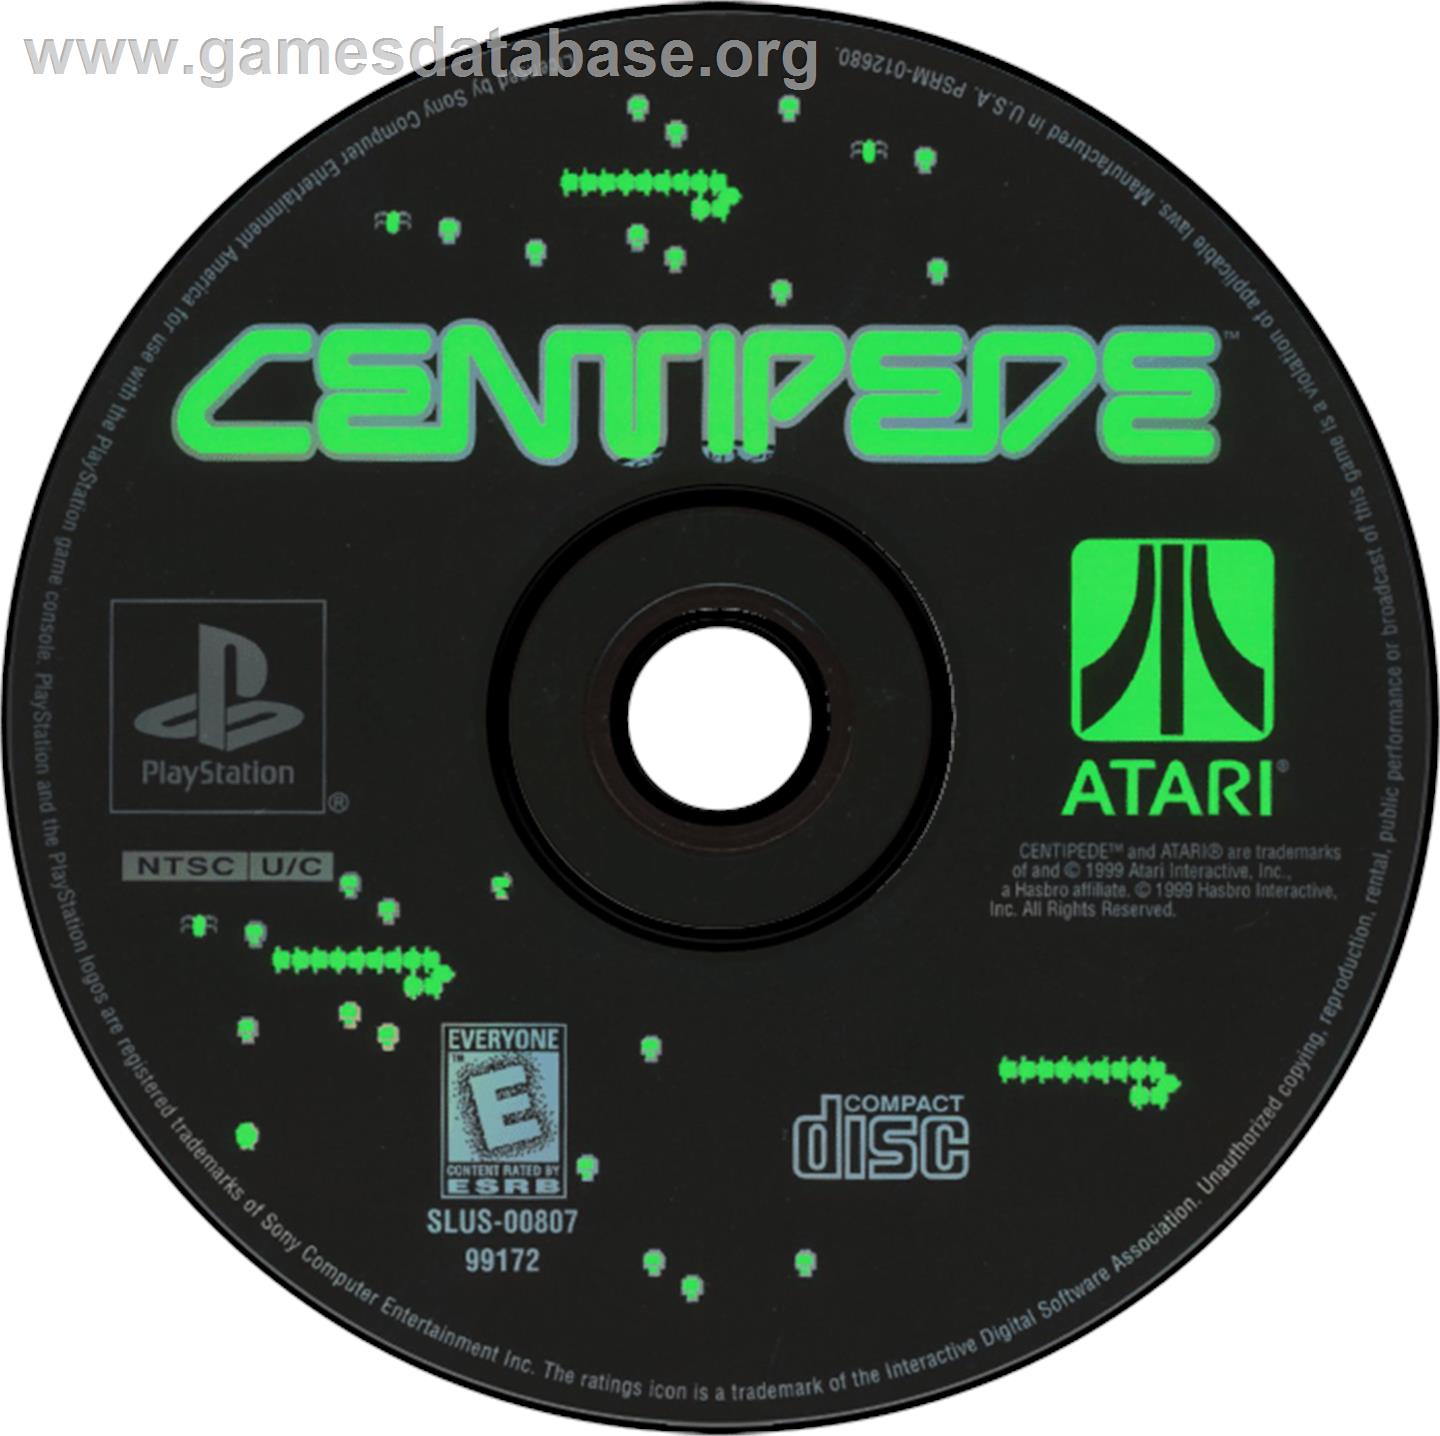 Centipede - Sony Playstation - Artwork - Disc